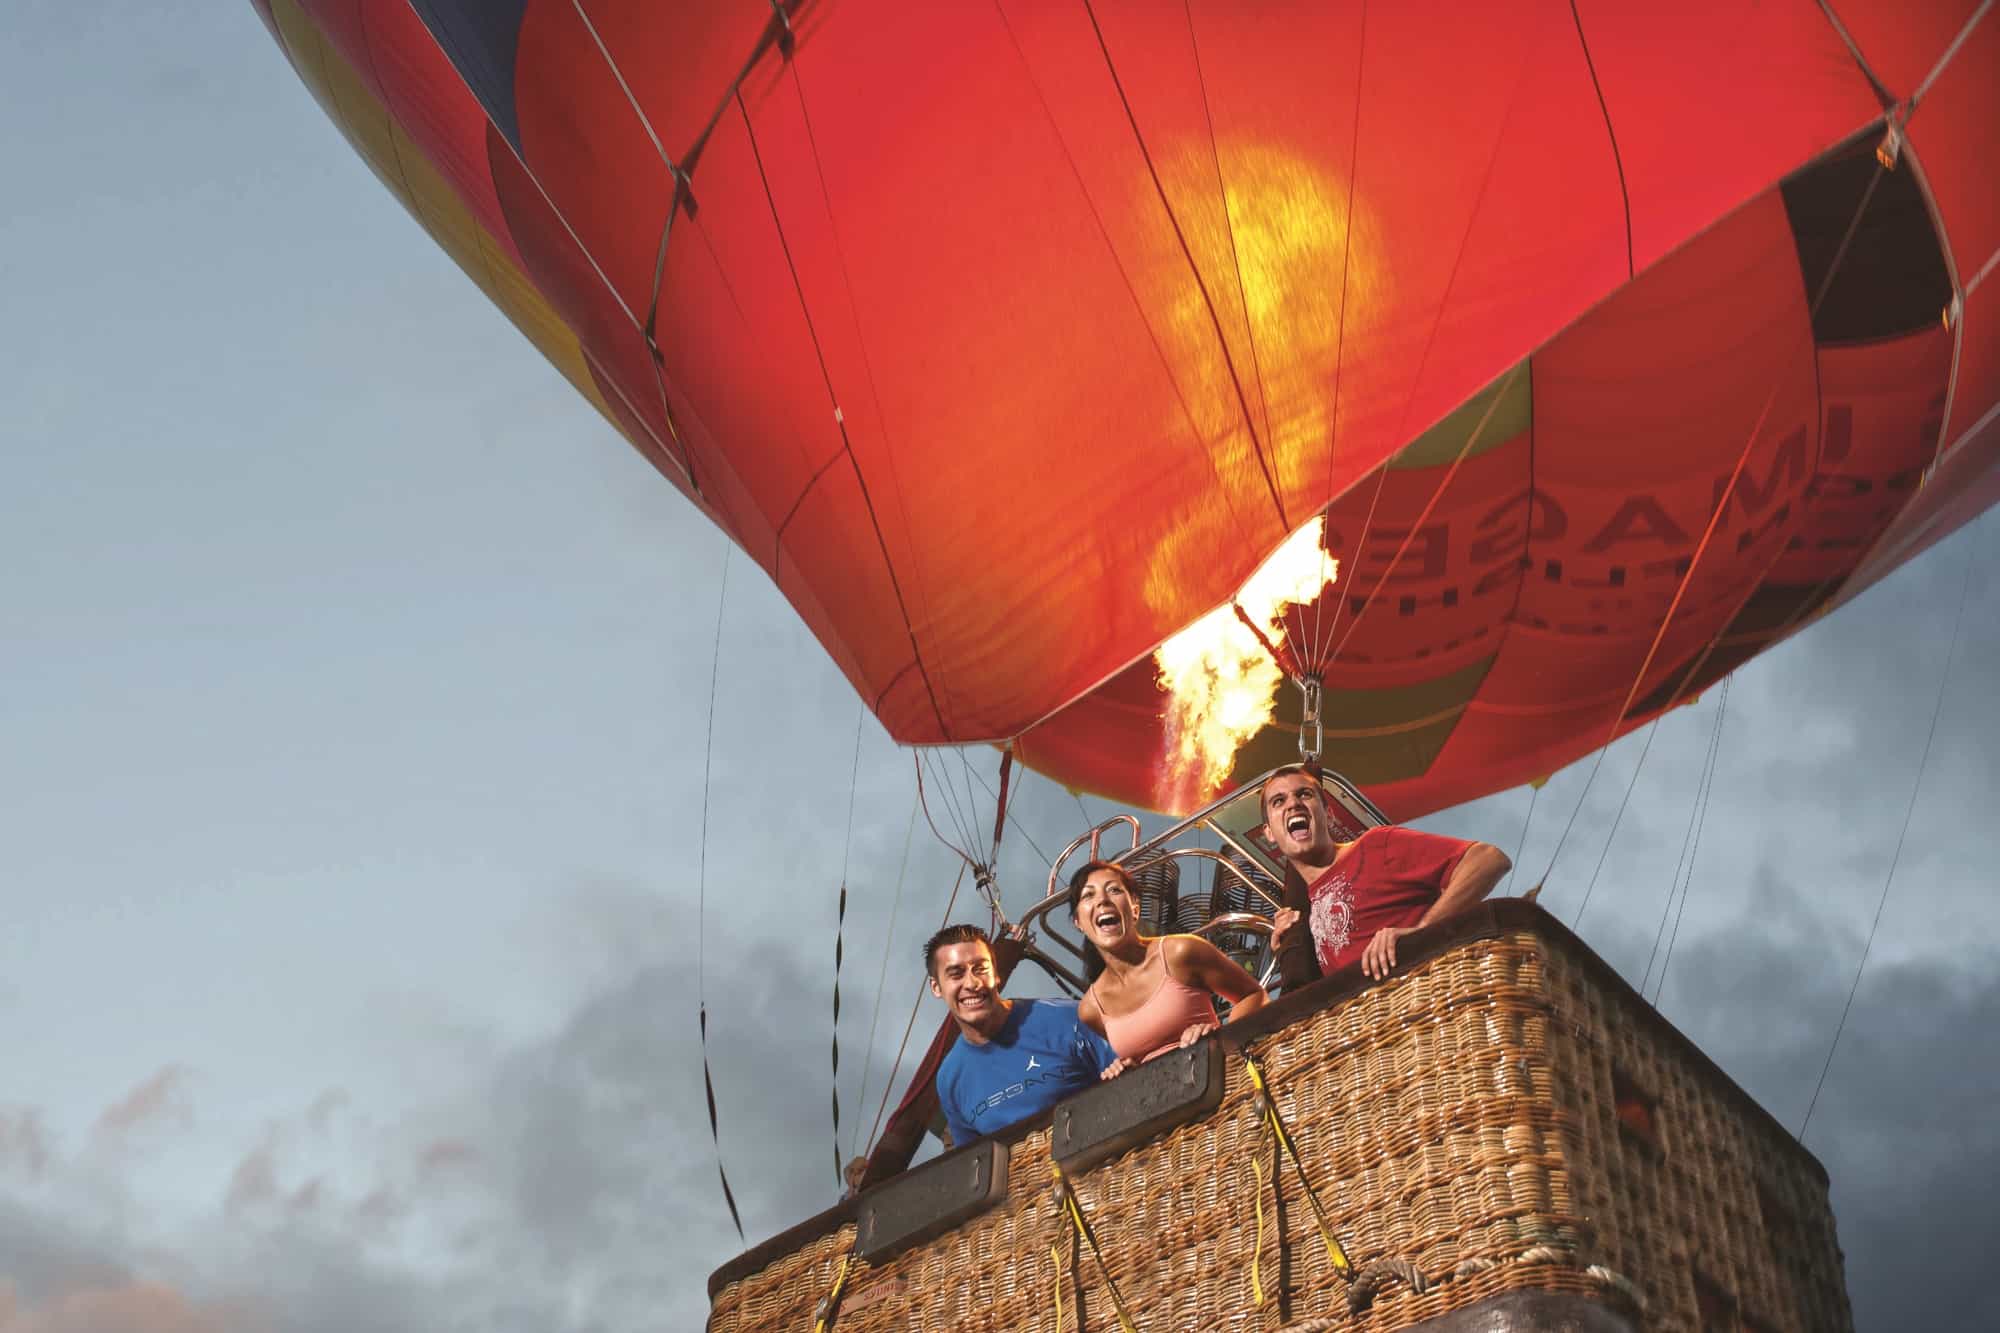 Floating Images Hot Air Balloon Flights